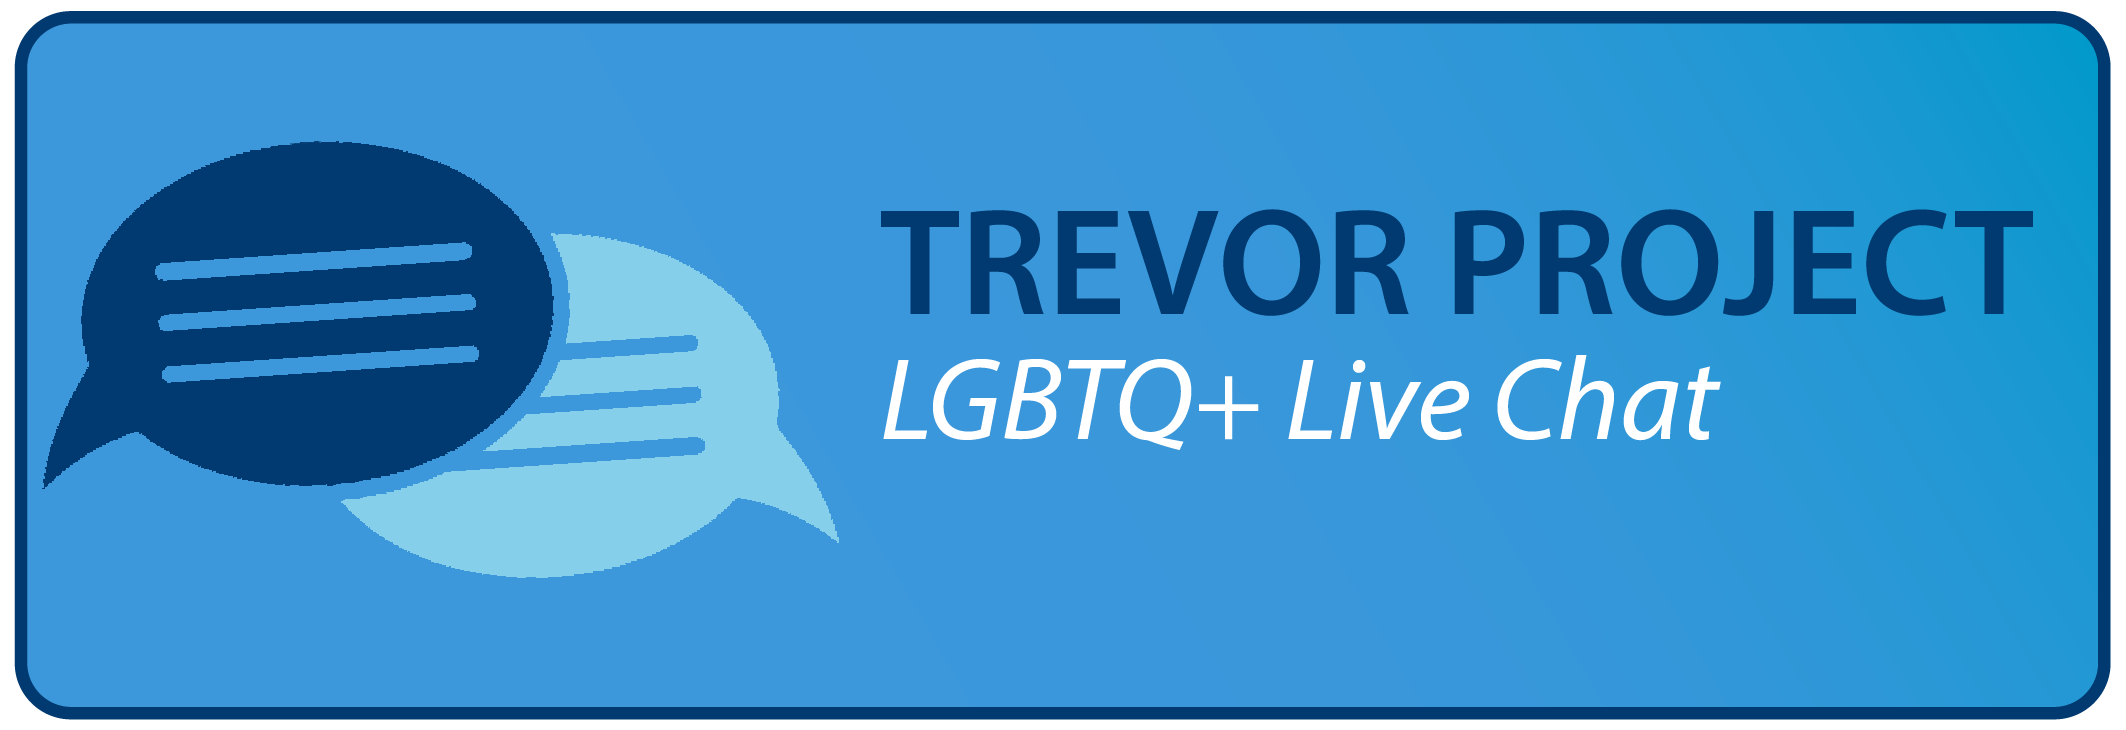 Trevor Project, LGBTQ Live Chat